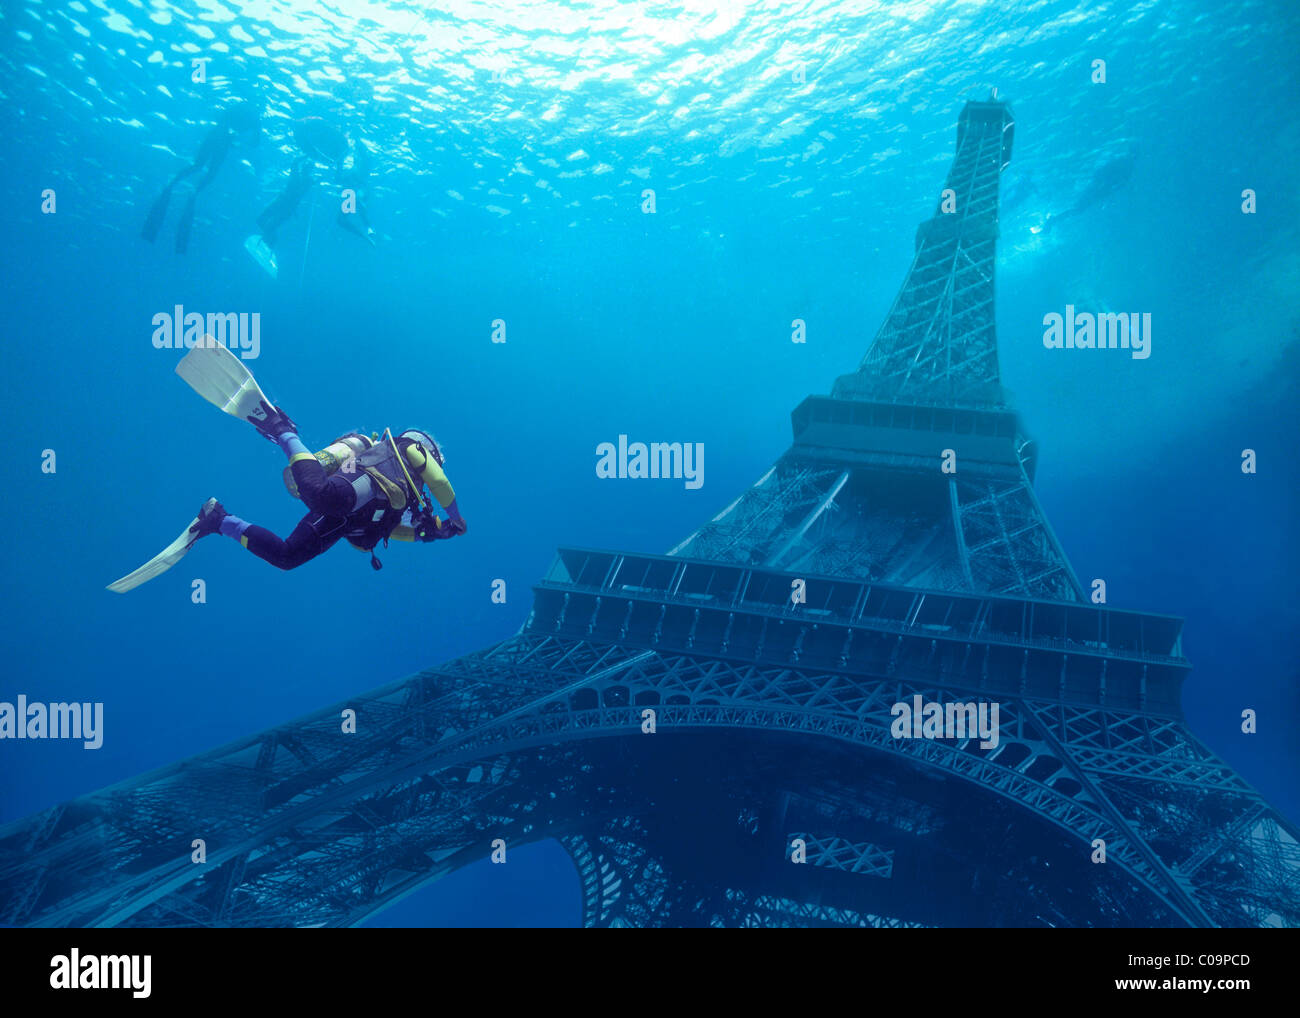 Torre Eiffel bajo el agua, imagen simbólica para el futuro aumento del nivel del mar Foto de stock